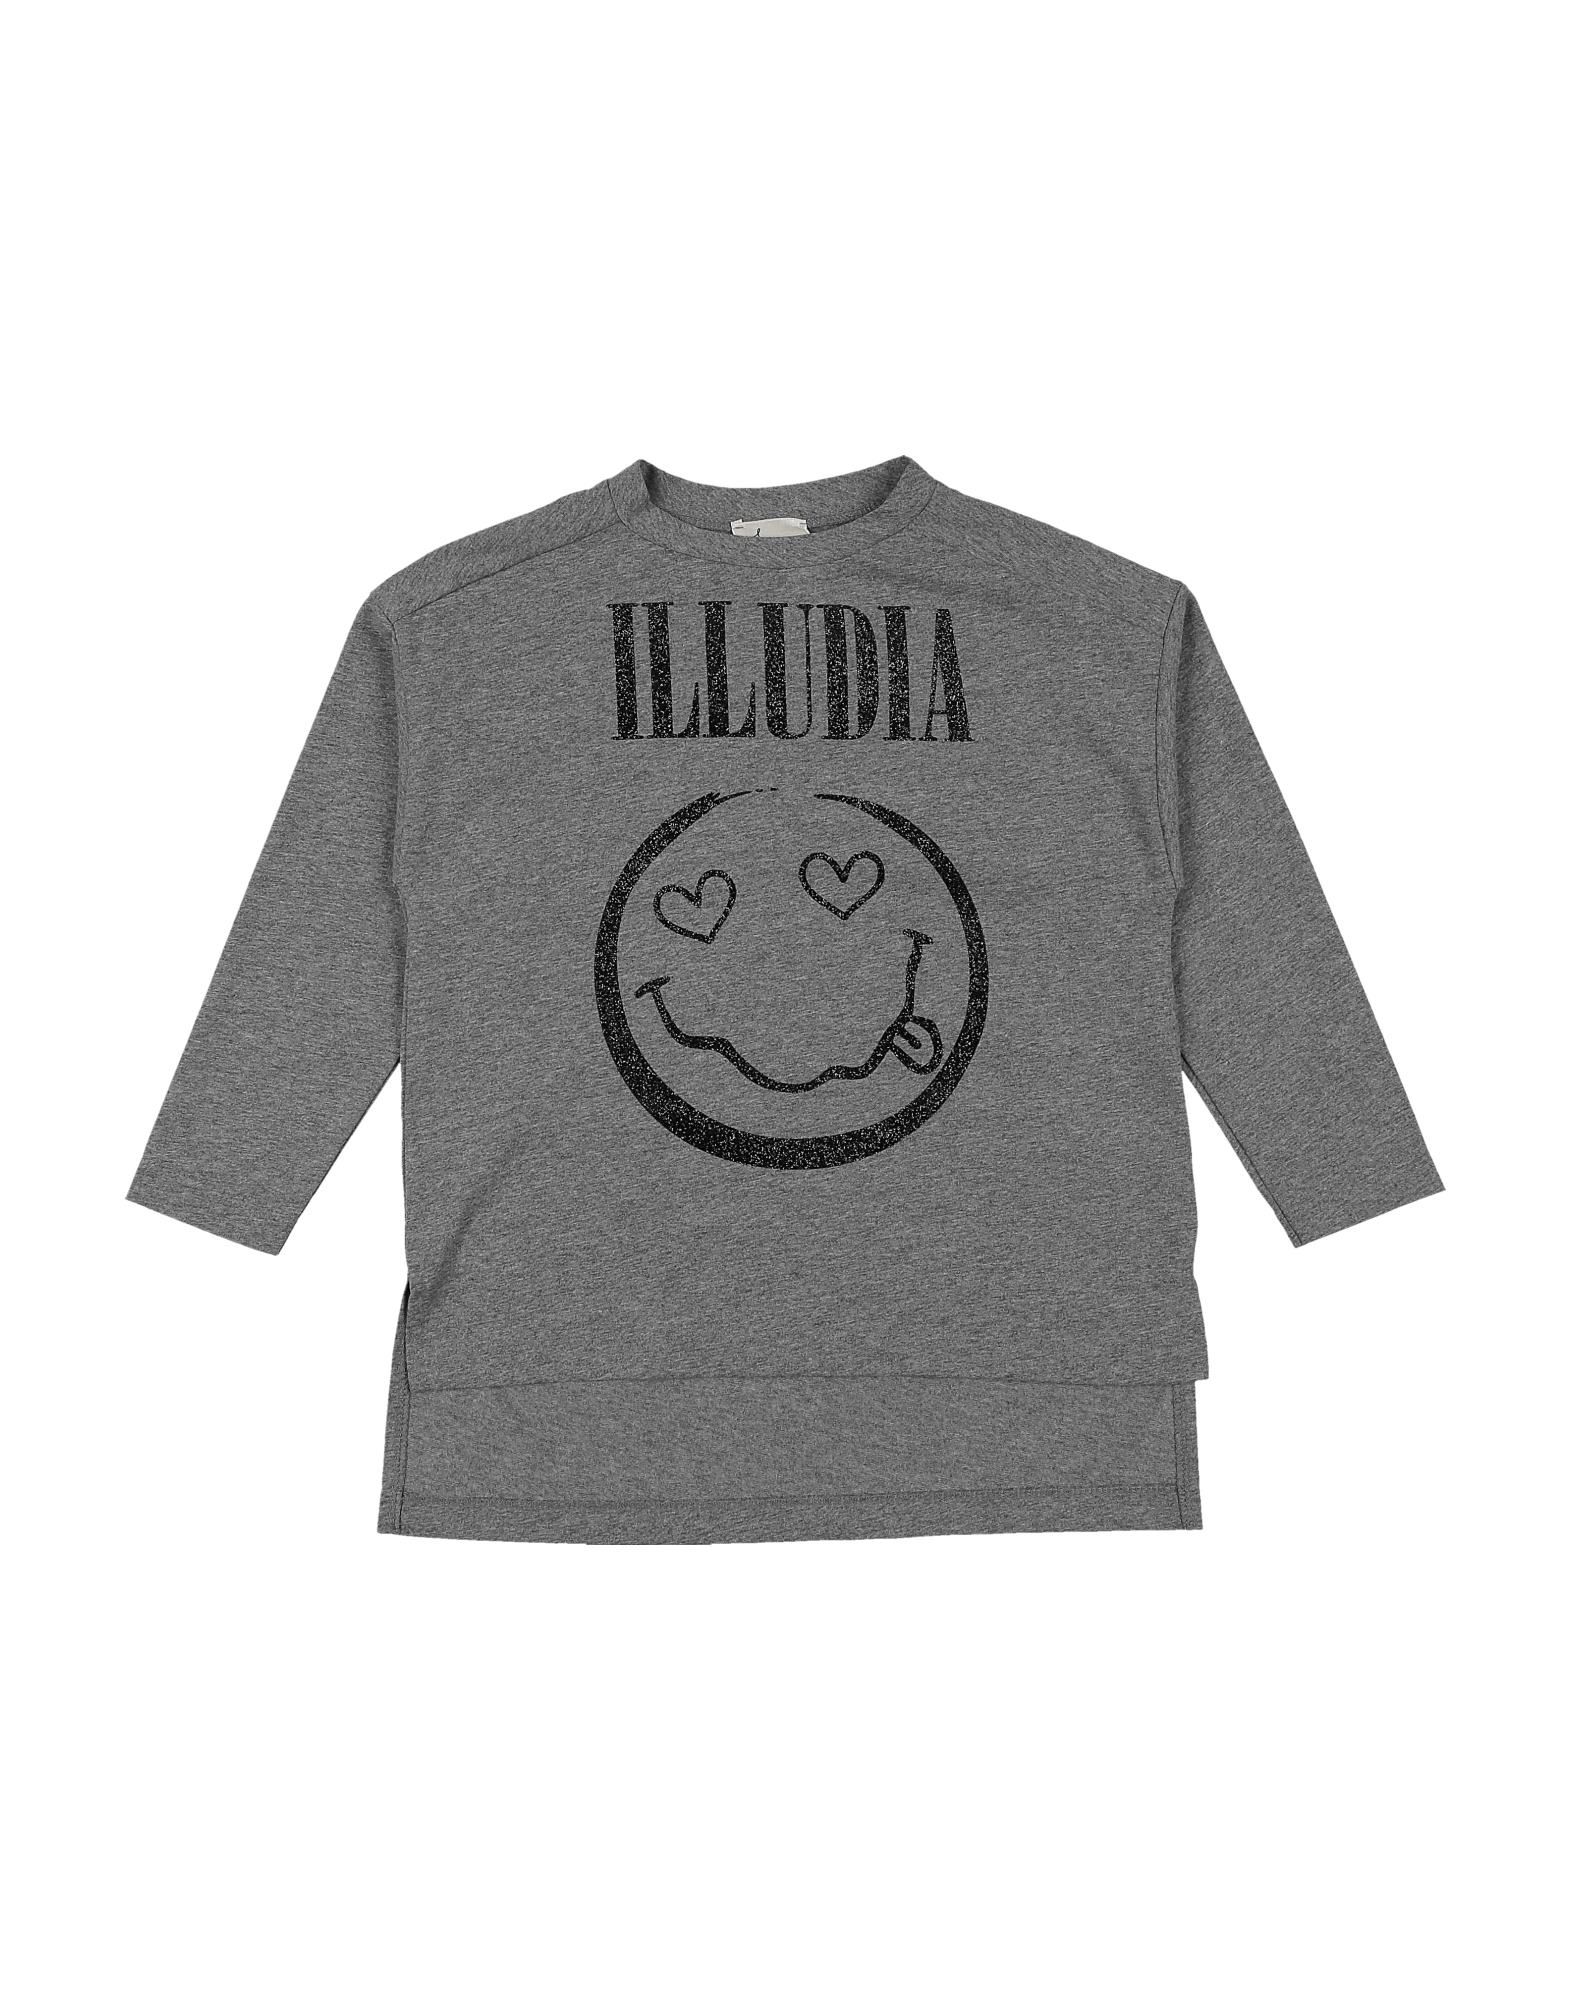 Illudia Kids' T-shirts In Grey